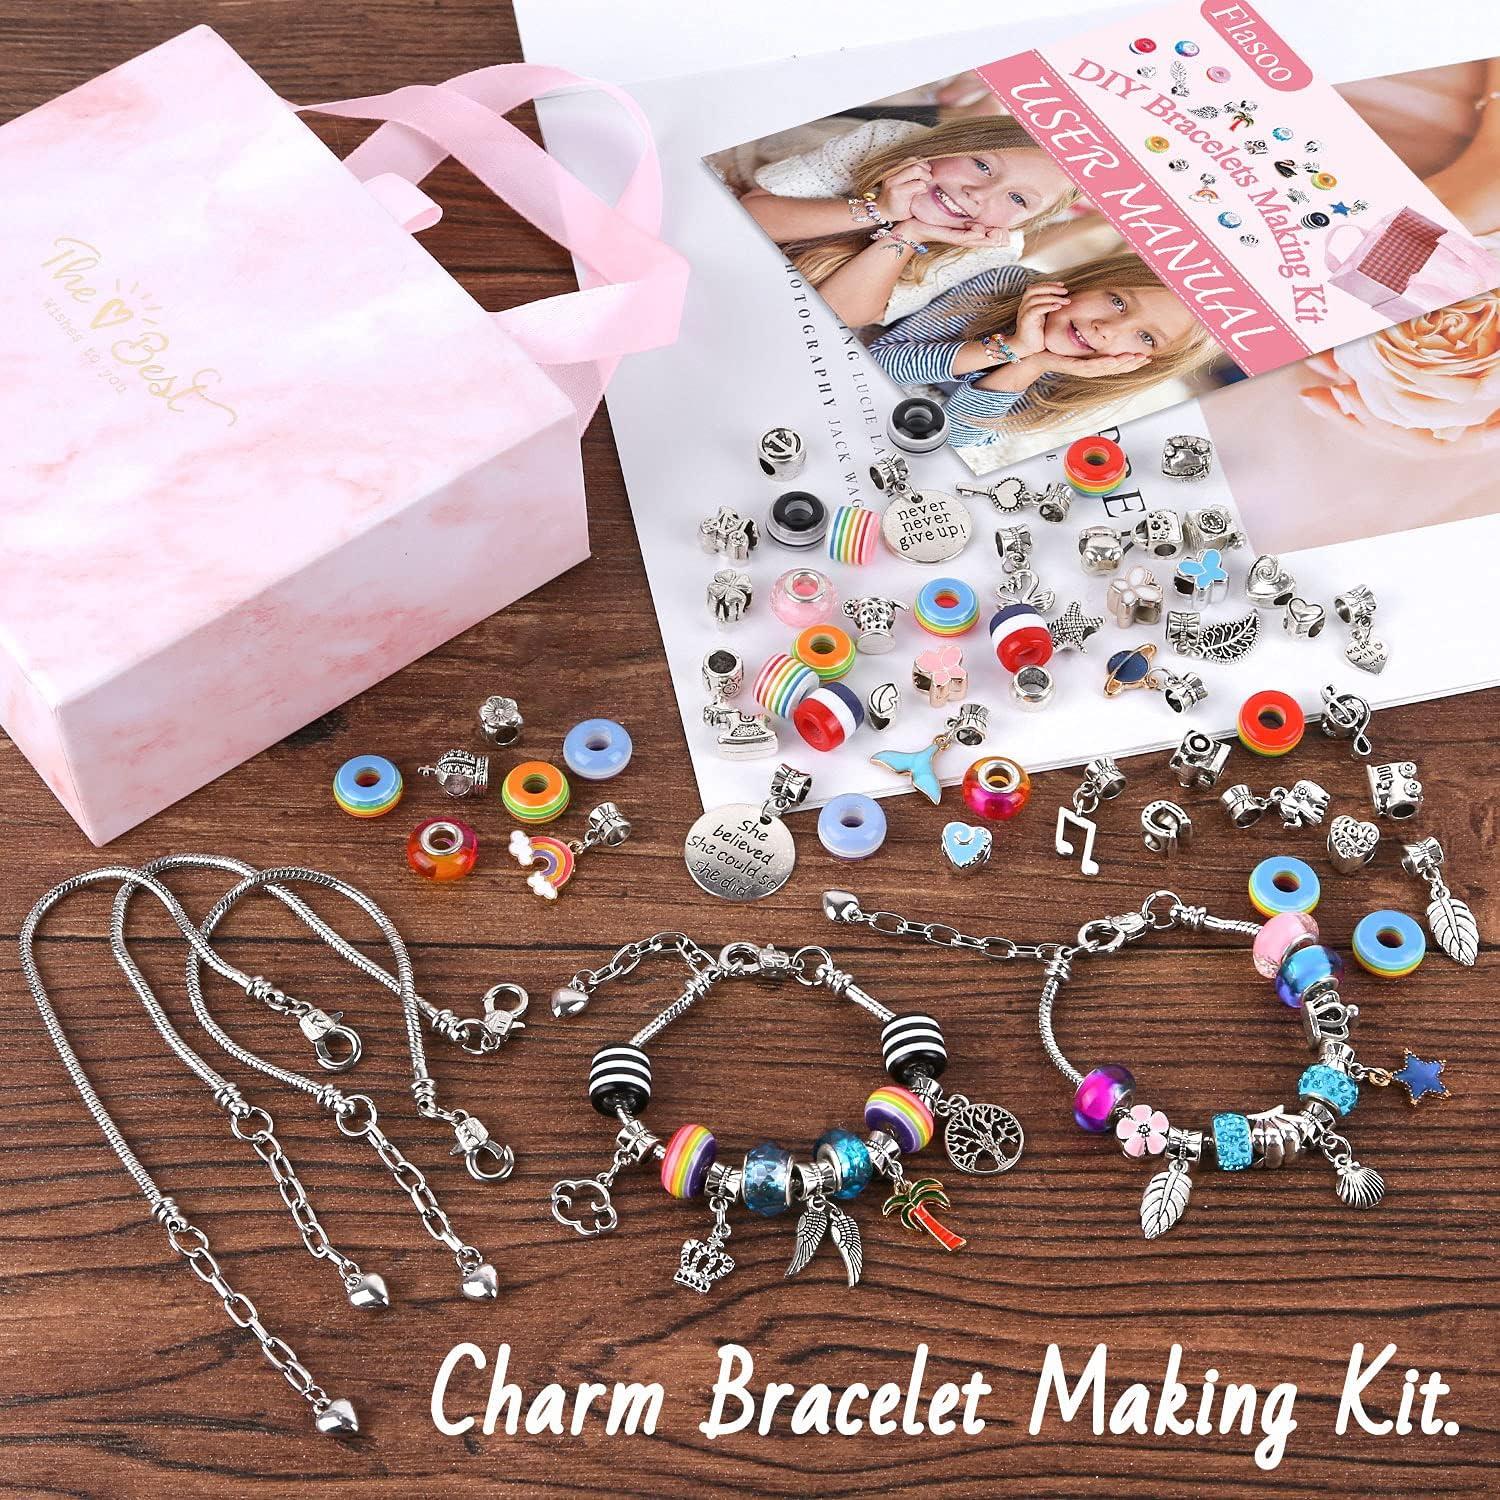 Bracelet Making Kit for Girls Flasoo 85PCs Charm Bracelets Kit